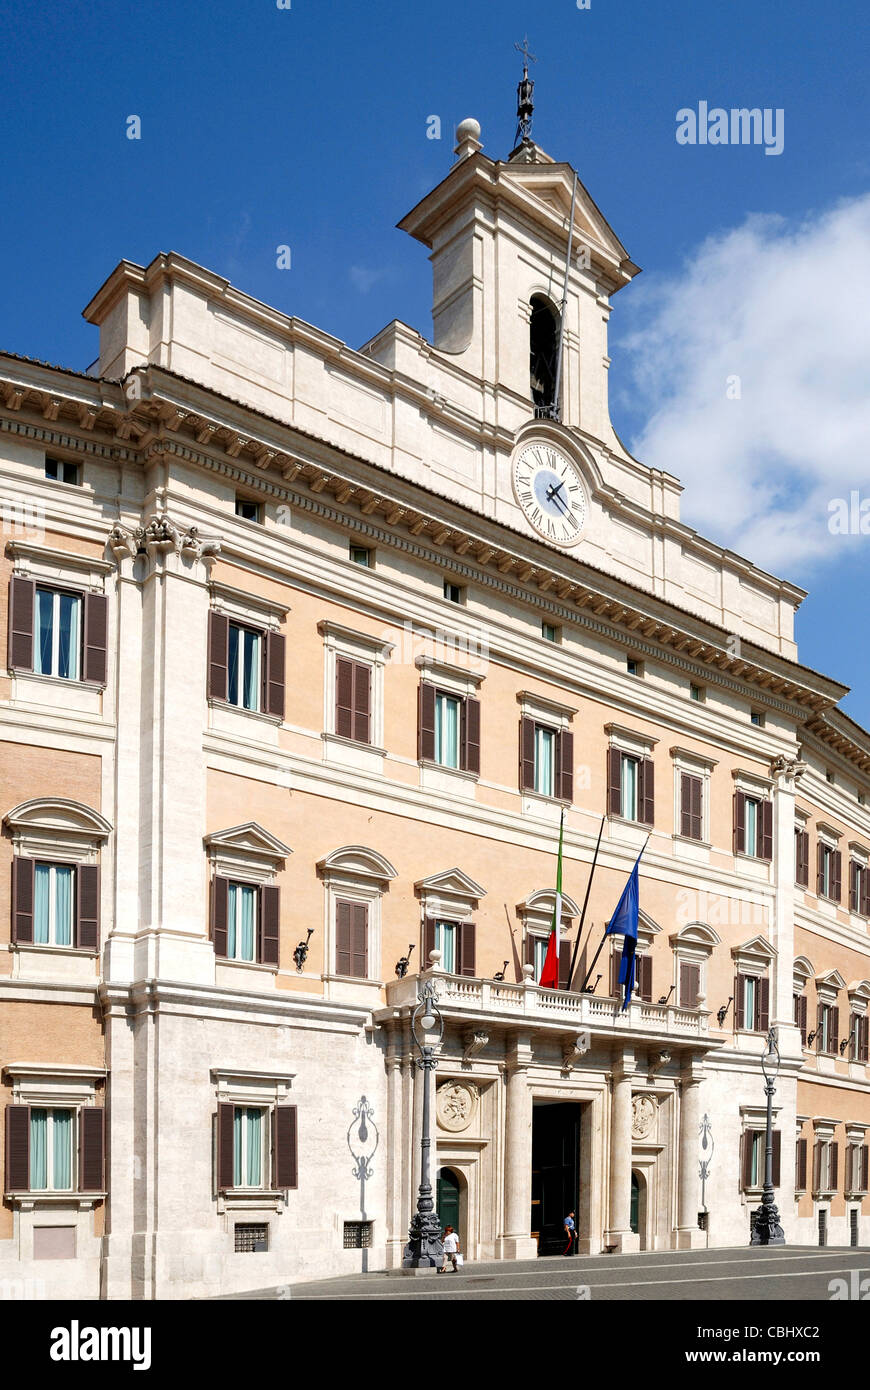 Palazzo Montecitorio in Rome - Seat of the Representative chamber of the Italian parliament. Stock Photo